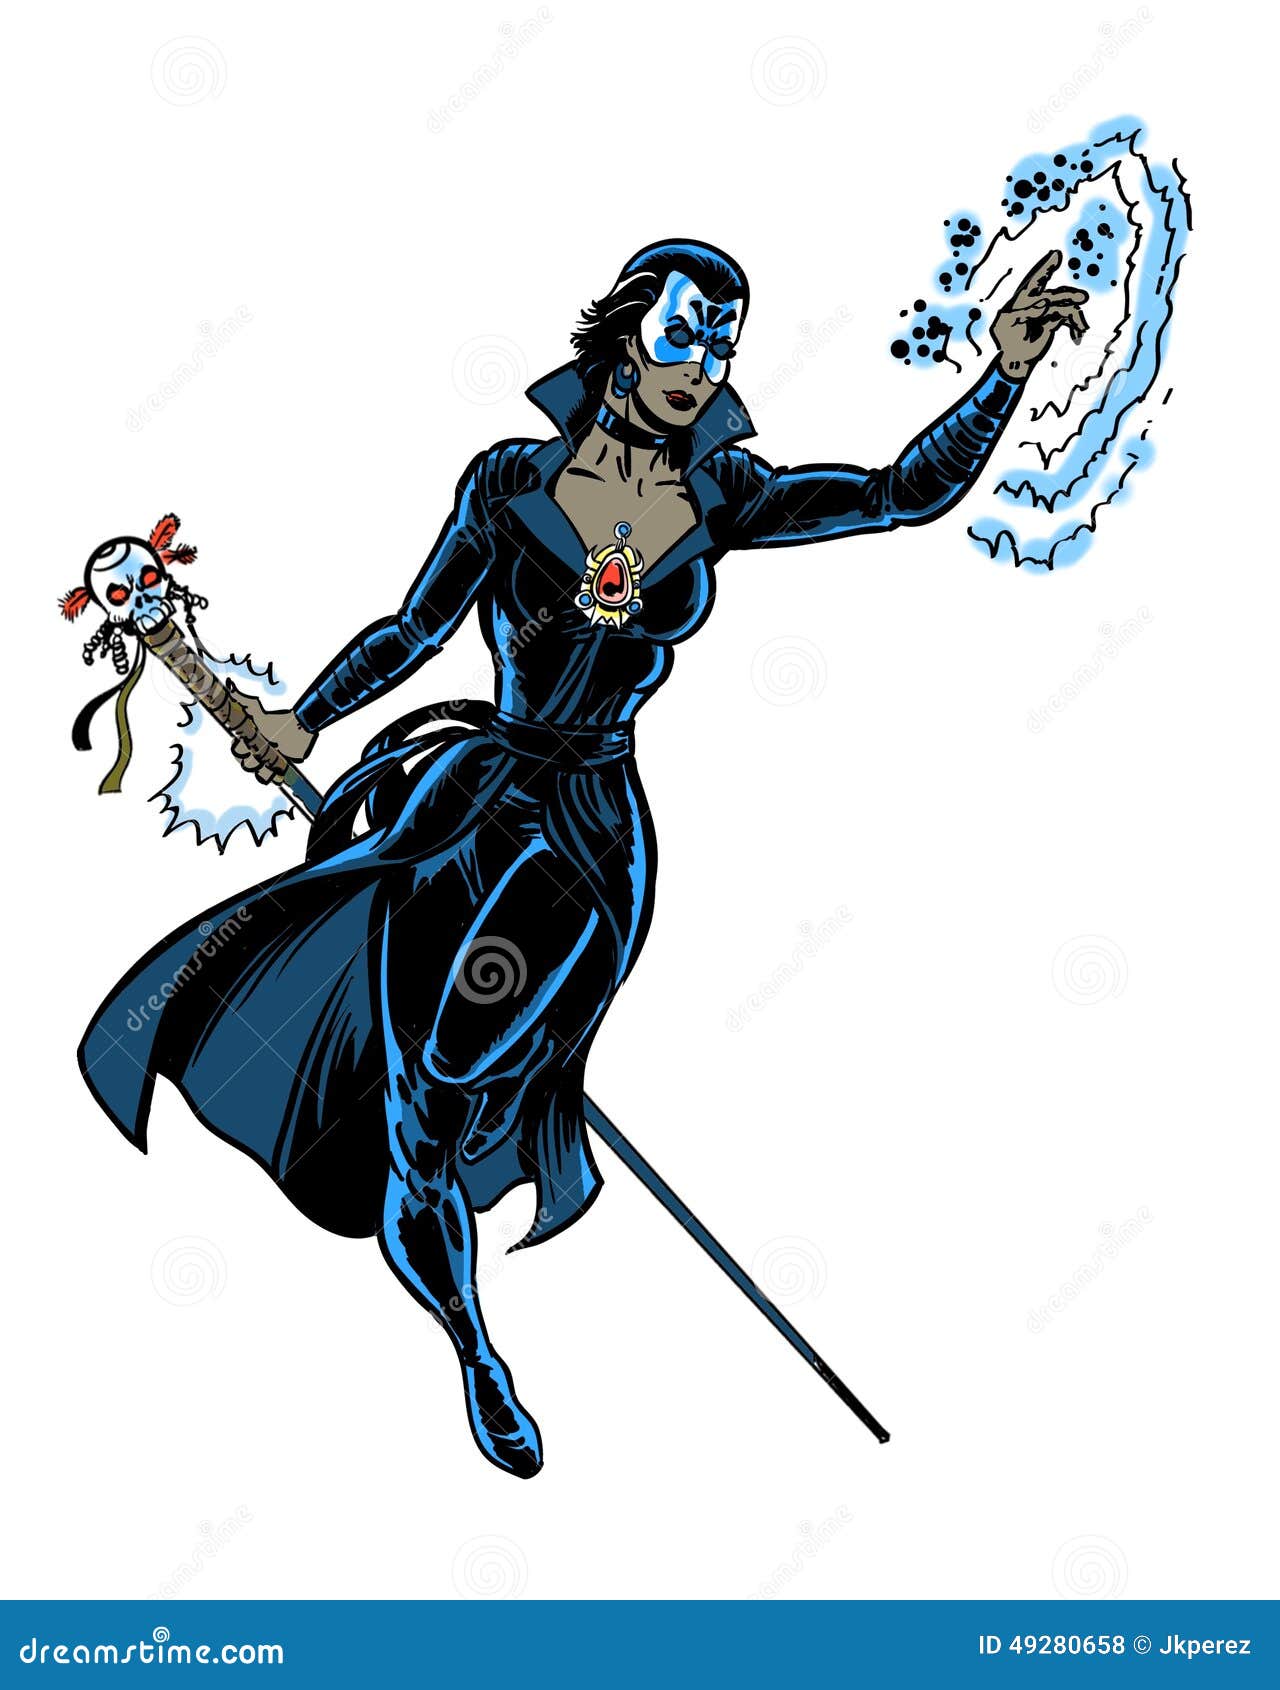 comic book illustrated voodoo mystic character